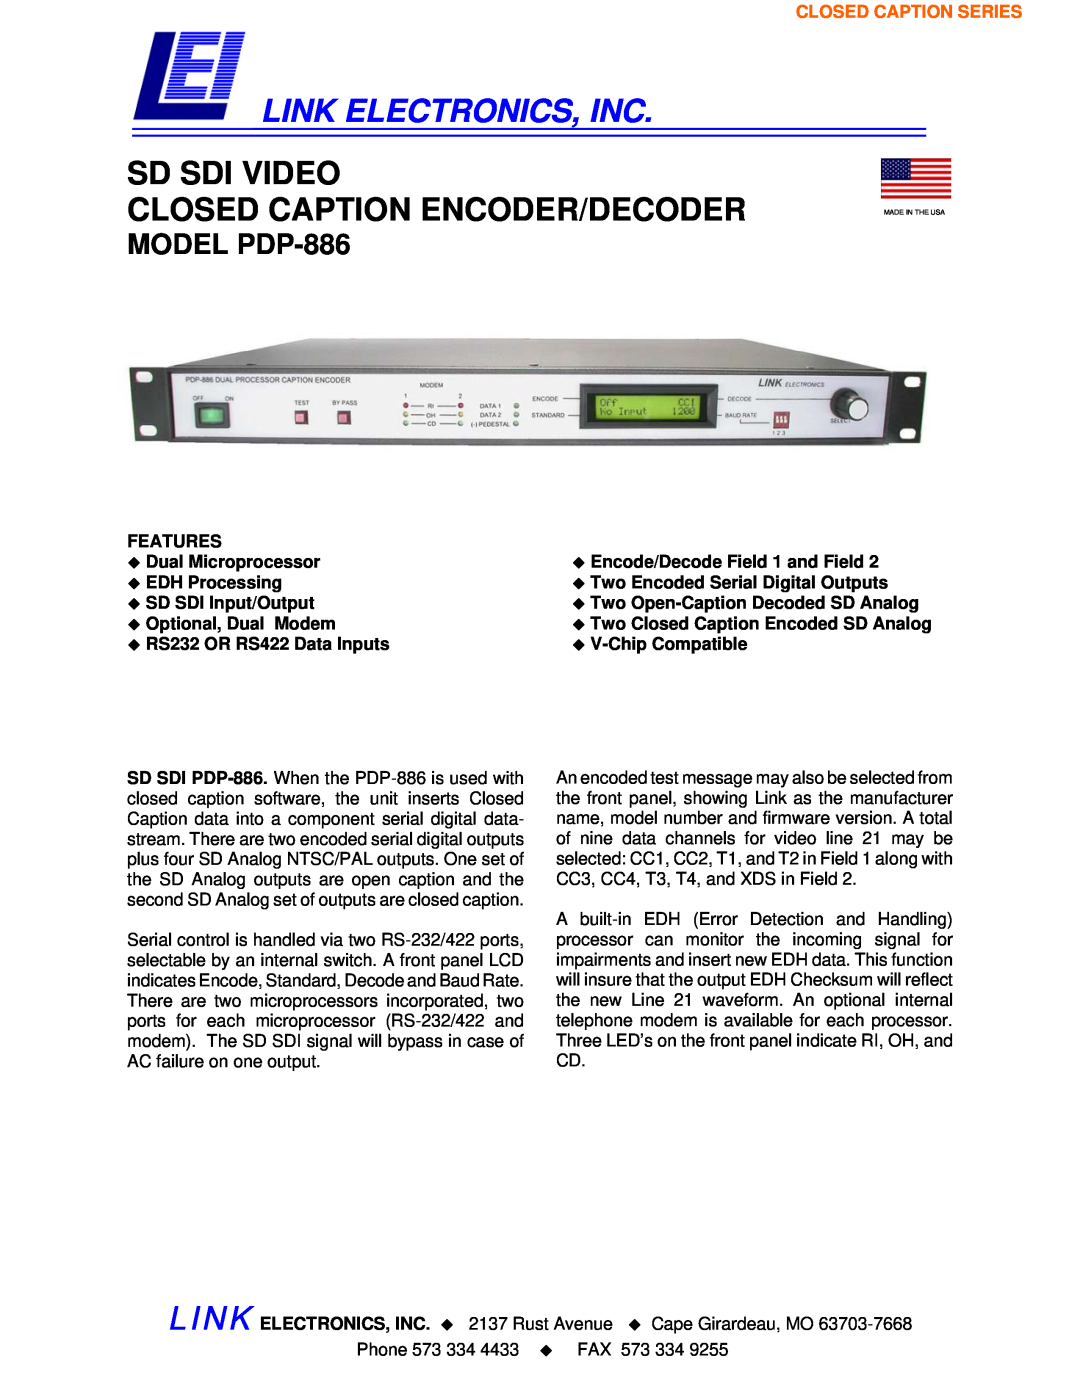 Link electronic manual Link Electronics, Inc, Sd Sdi Video Closed Caption Encoder/Decoder, MODEL PDP-886 